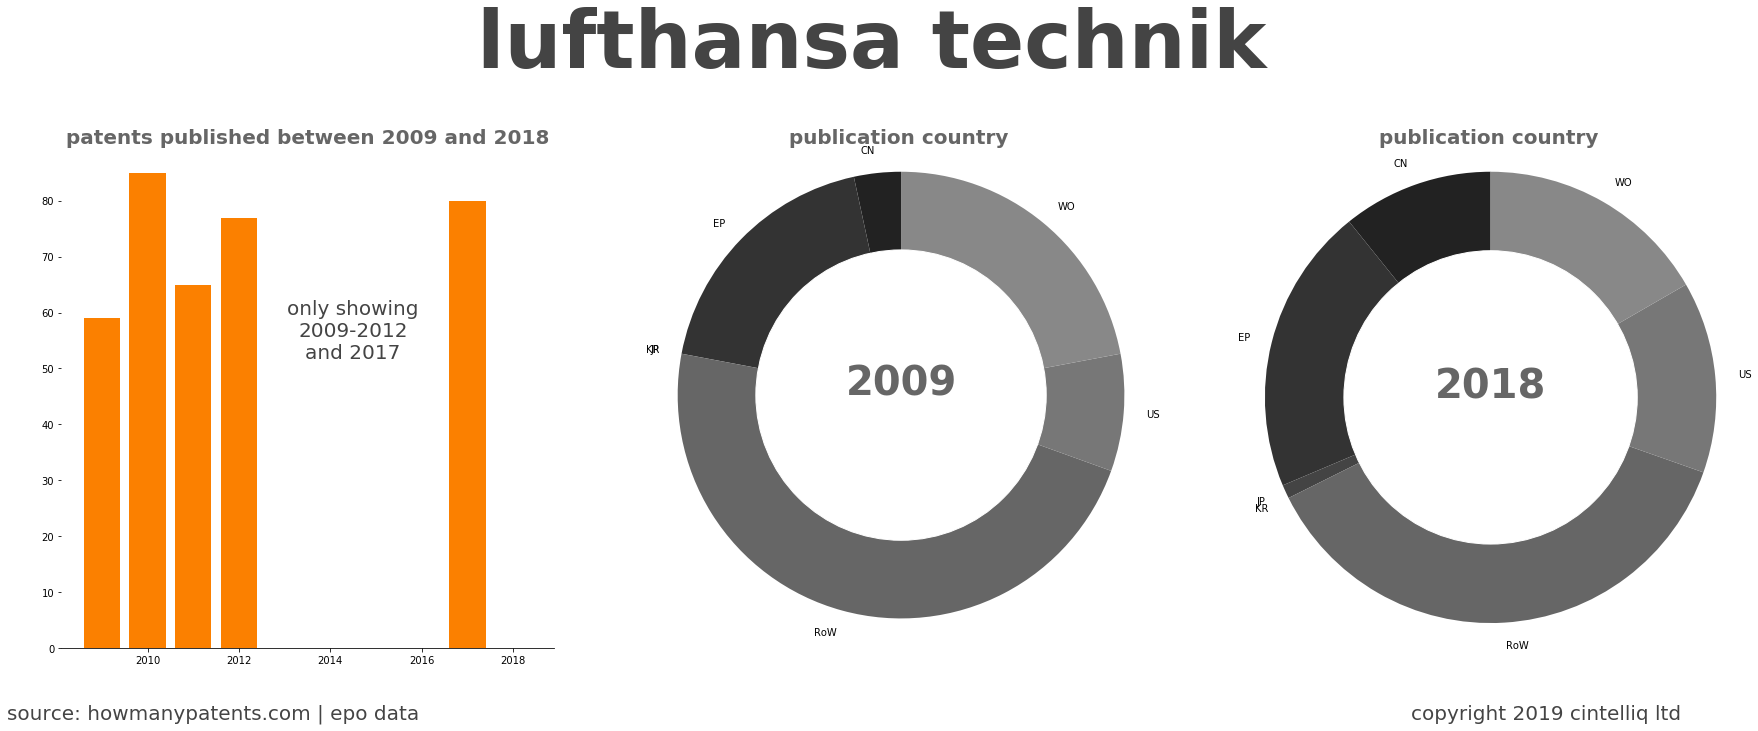 summary of patents for Lufthansa Technik